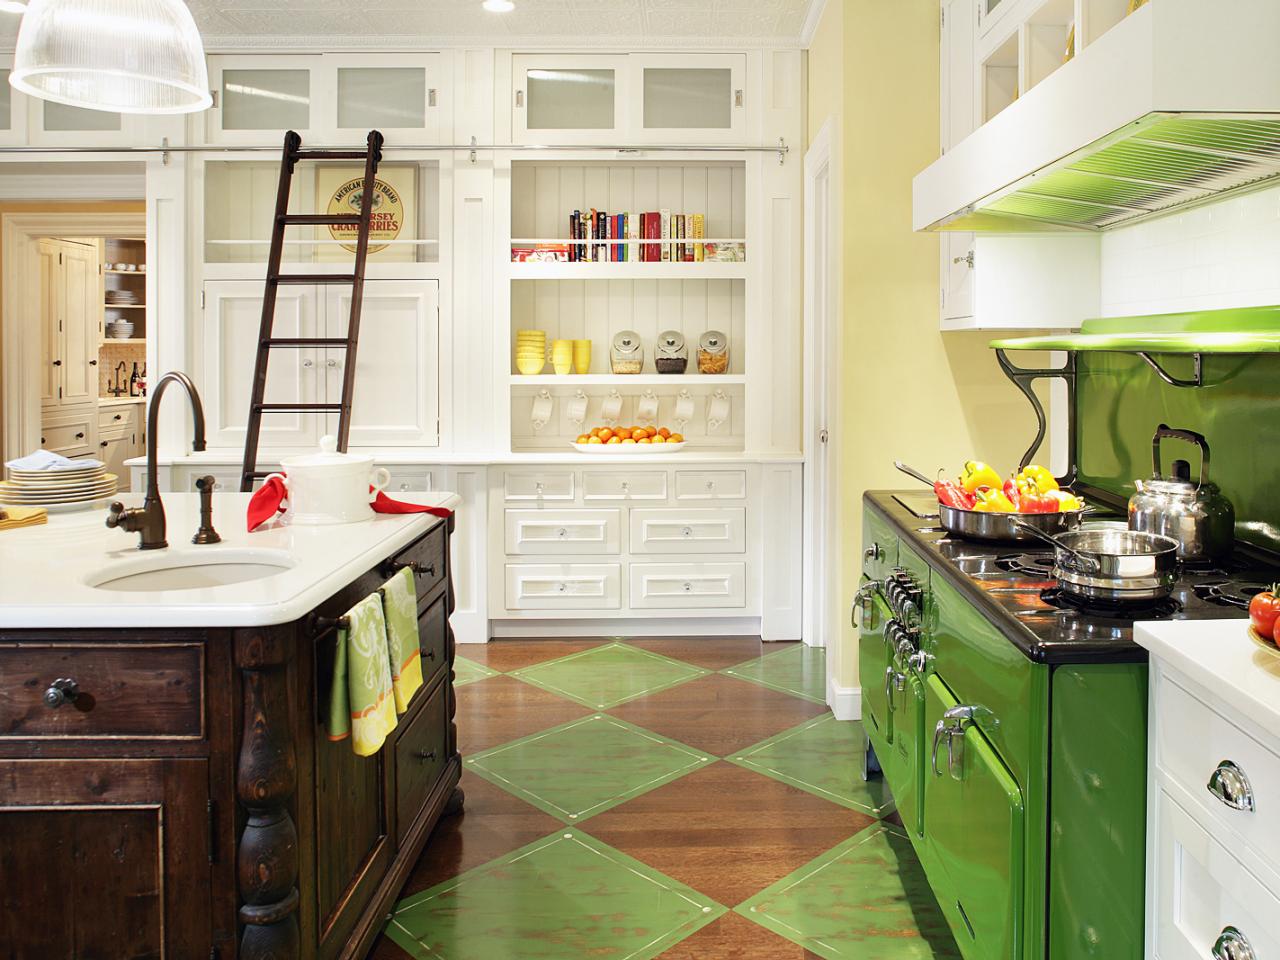 Vintage Yellow and Green Kitchen | HGTV